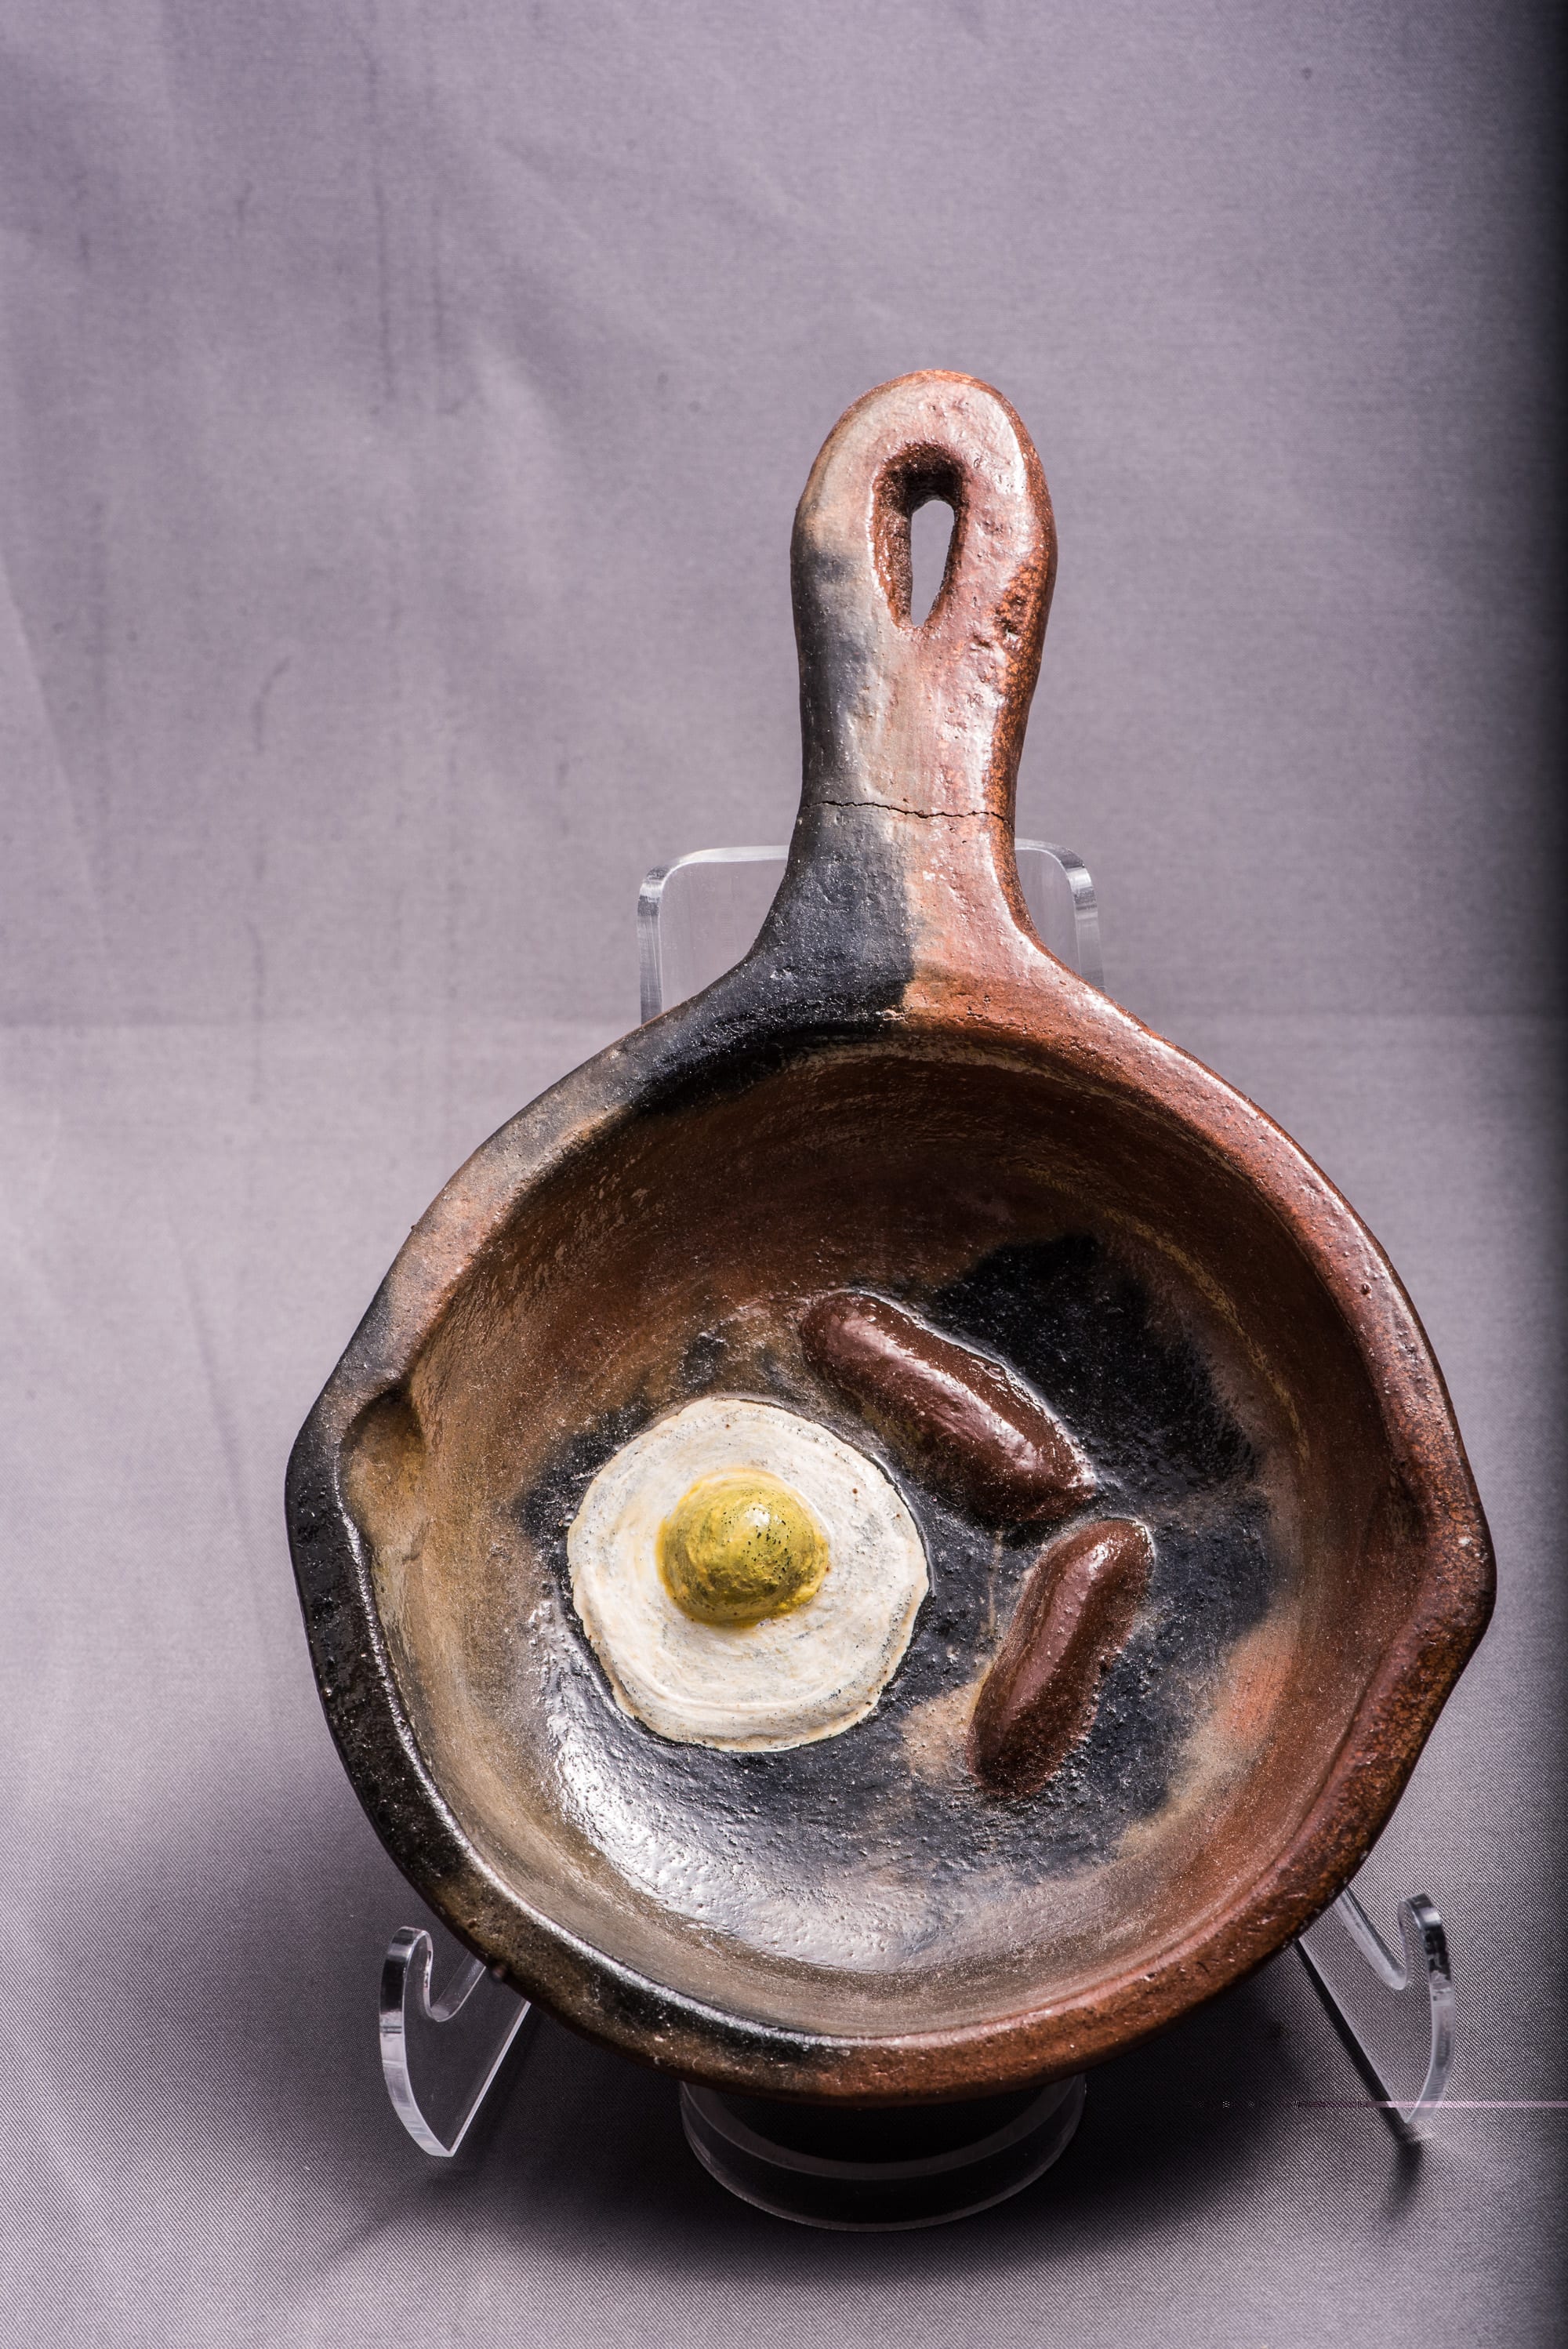 2014-09 Navajo frying pan with egg and sausage